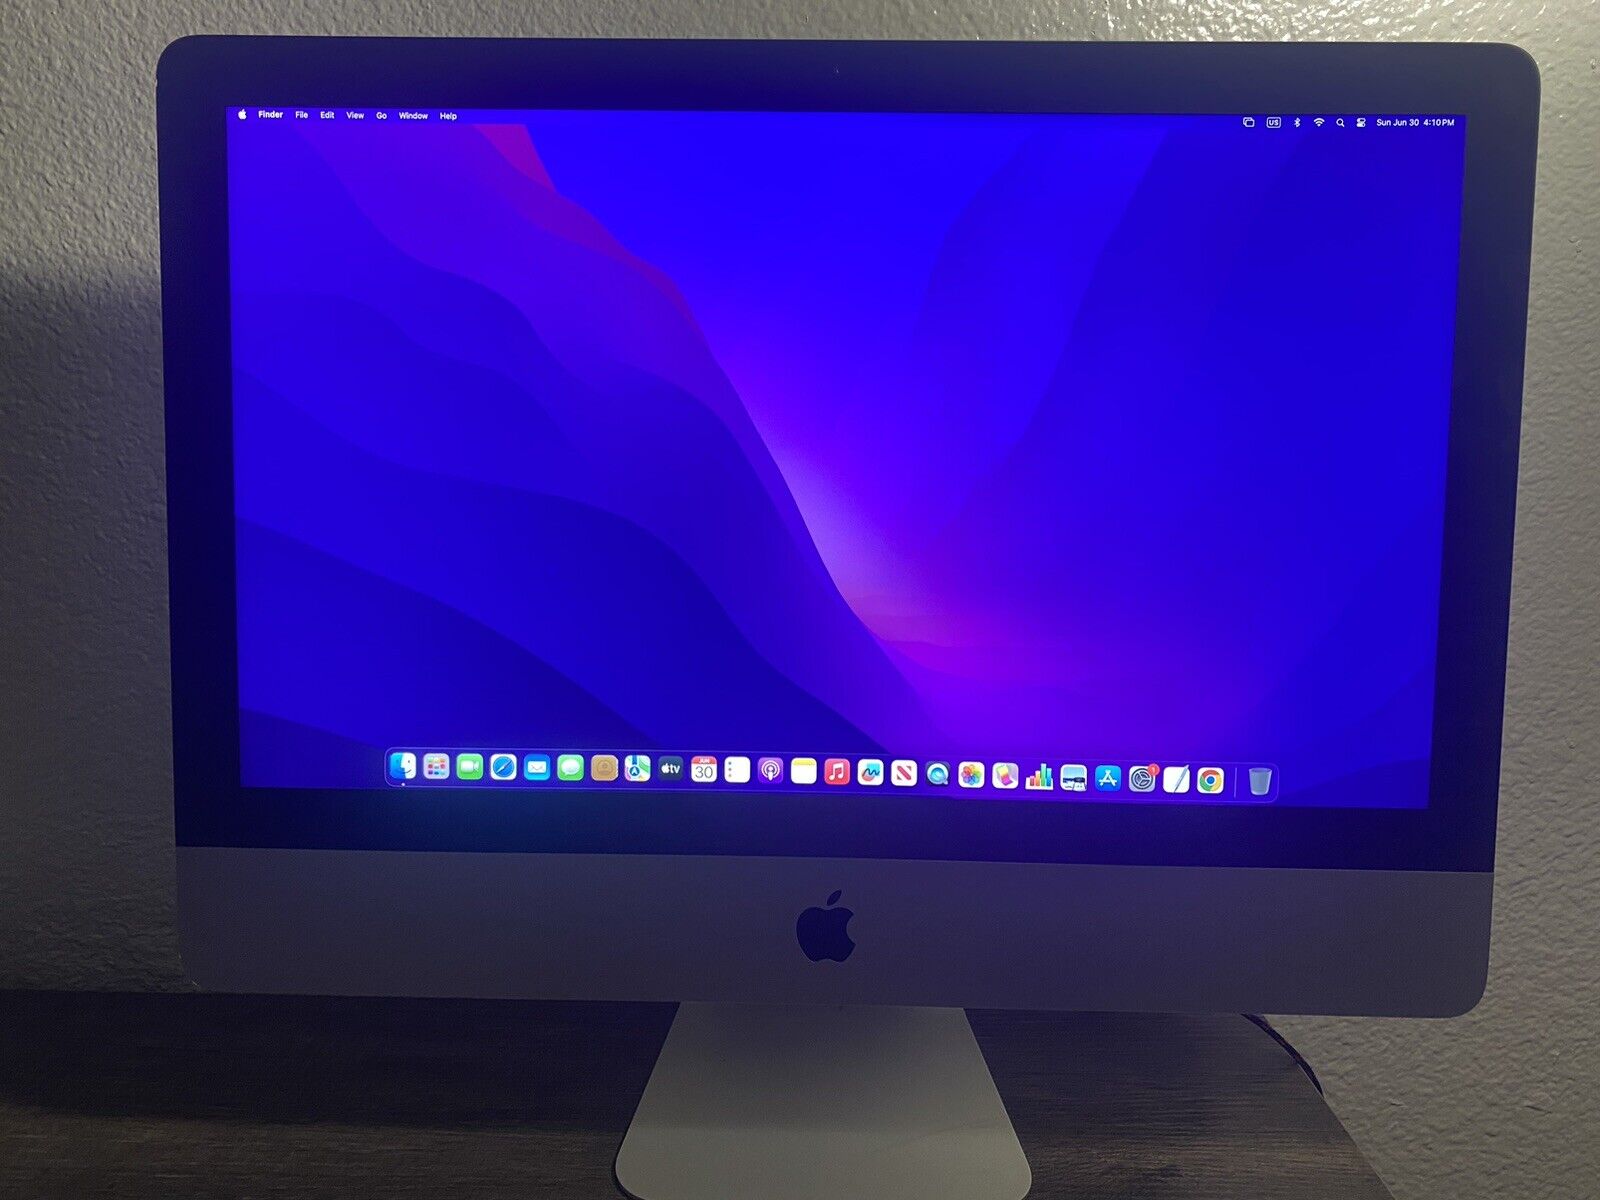 2019 Apple iMac with 21.5in Retina 4K display 1TB HDD, Intel Core i3 8th Gen